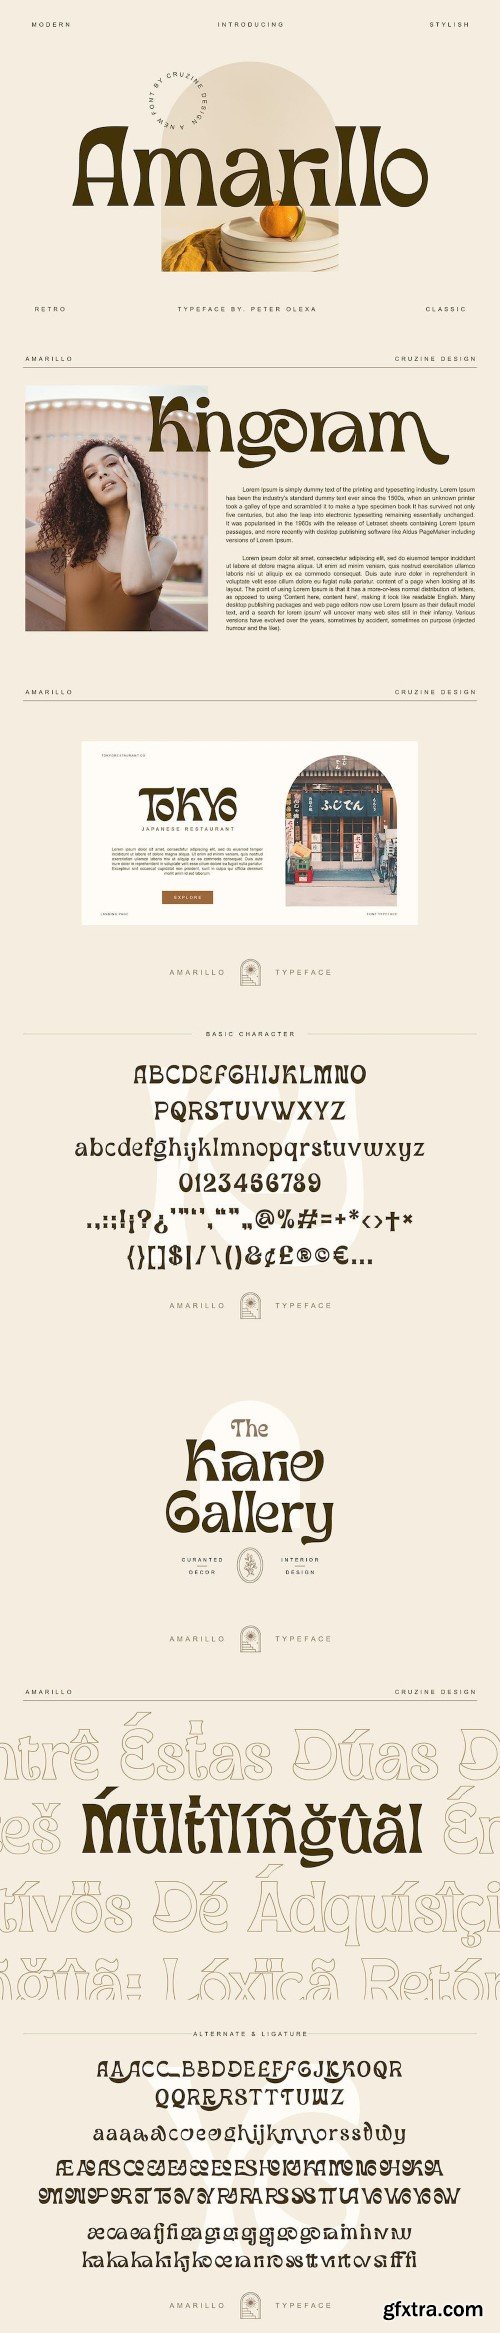 Amarillo - Modern Sans Font